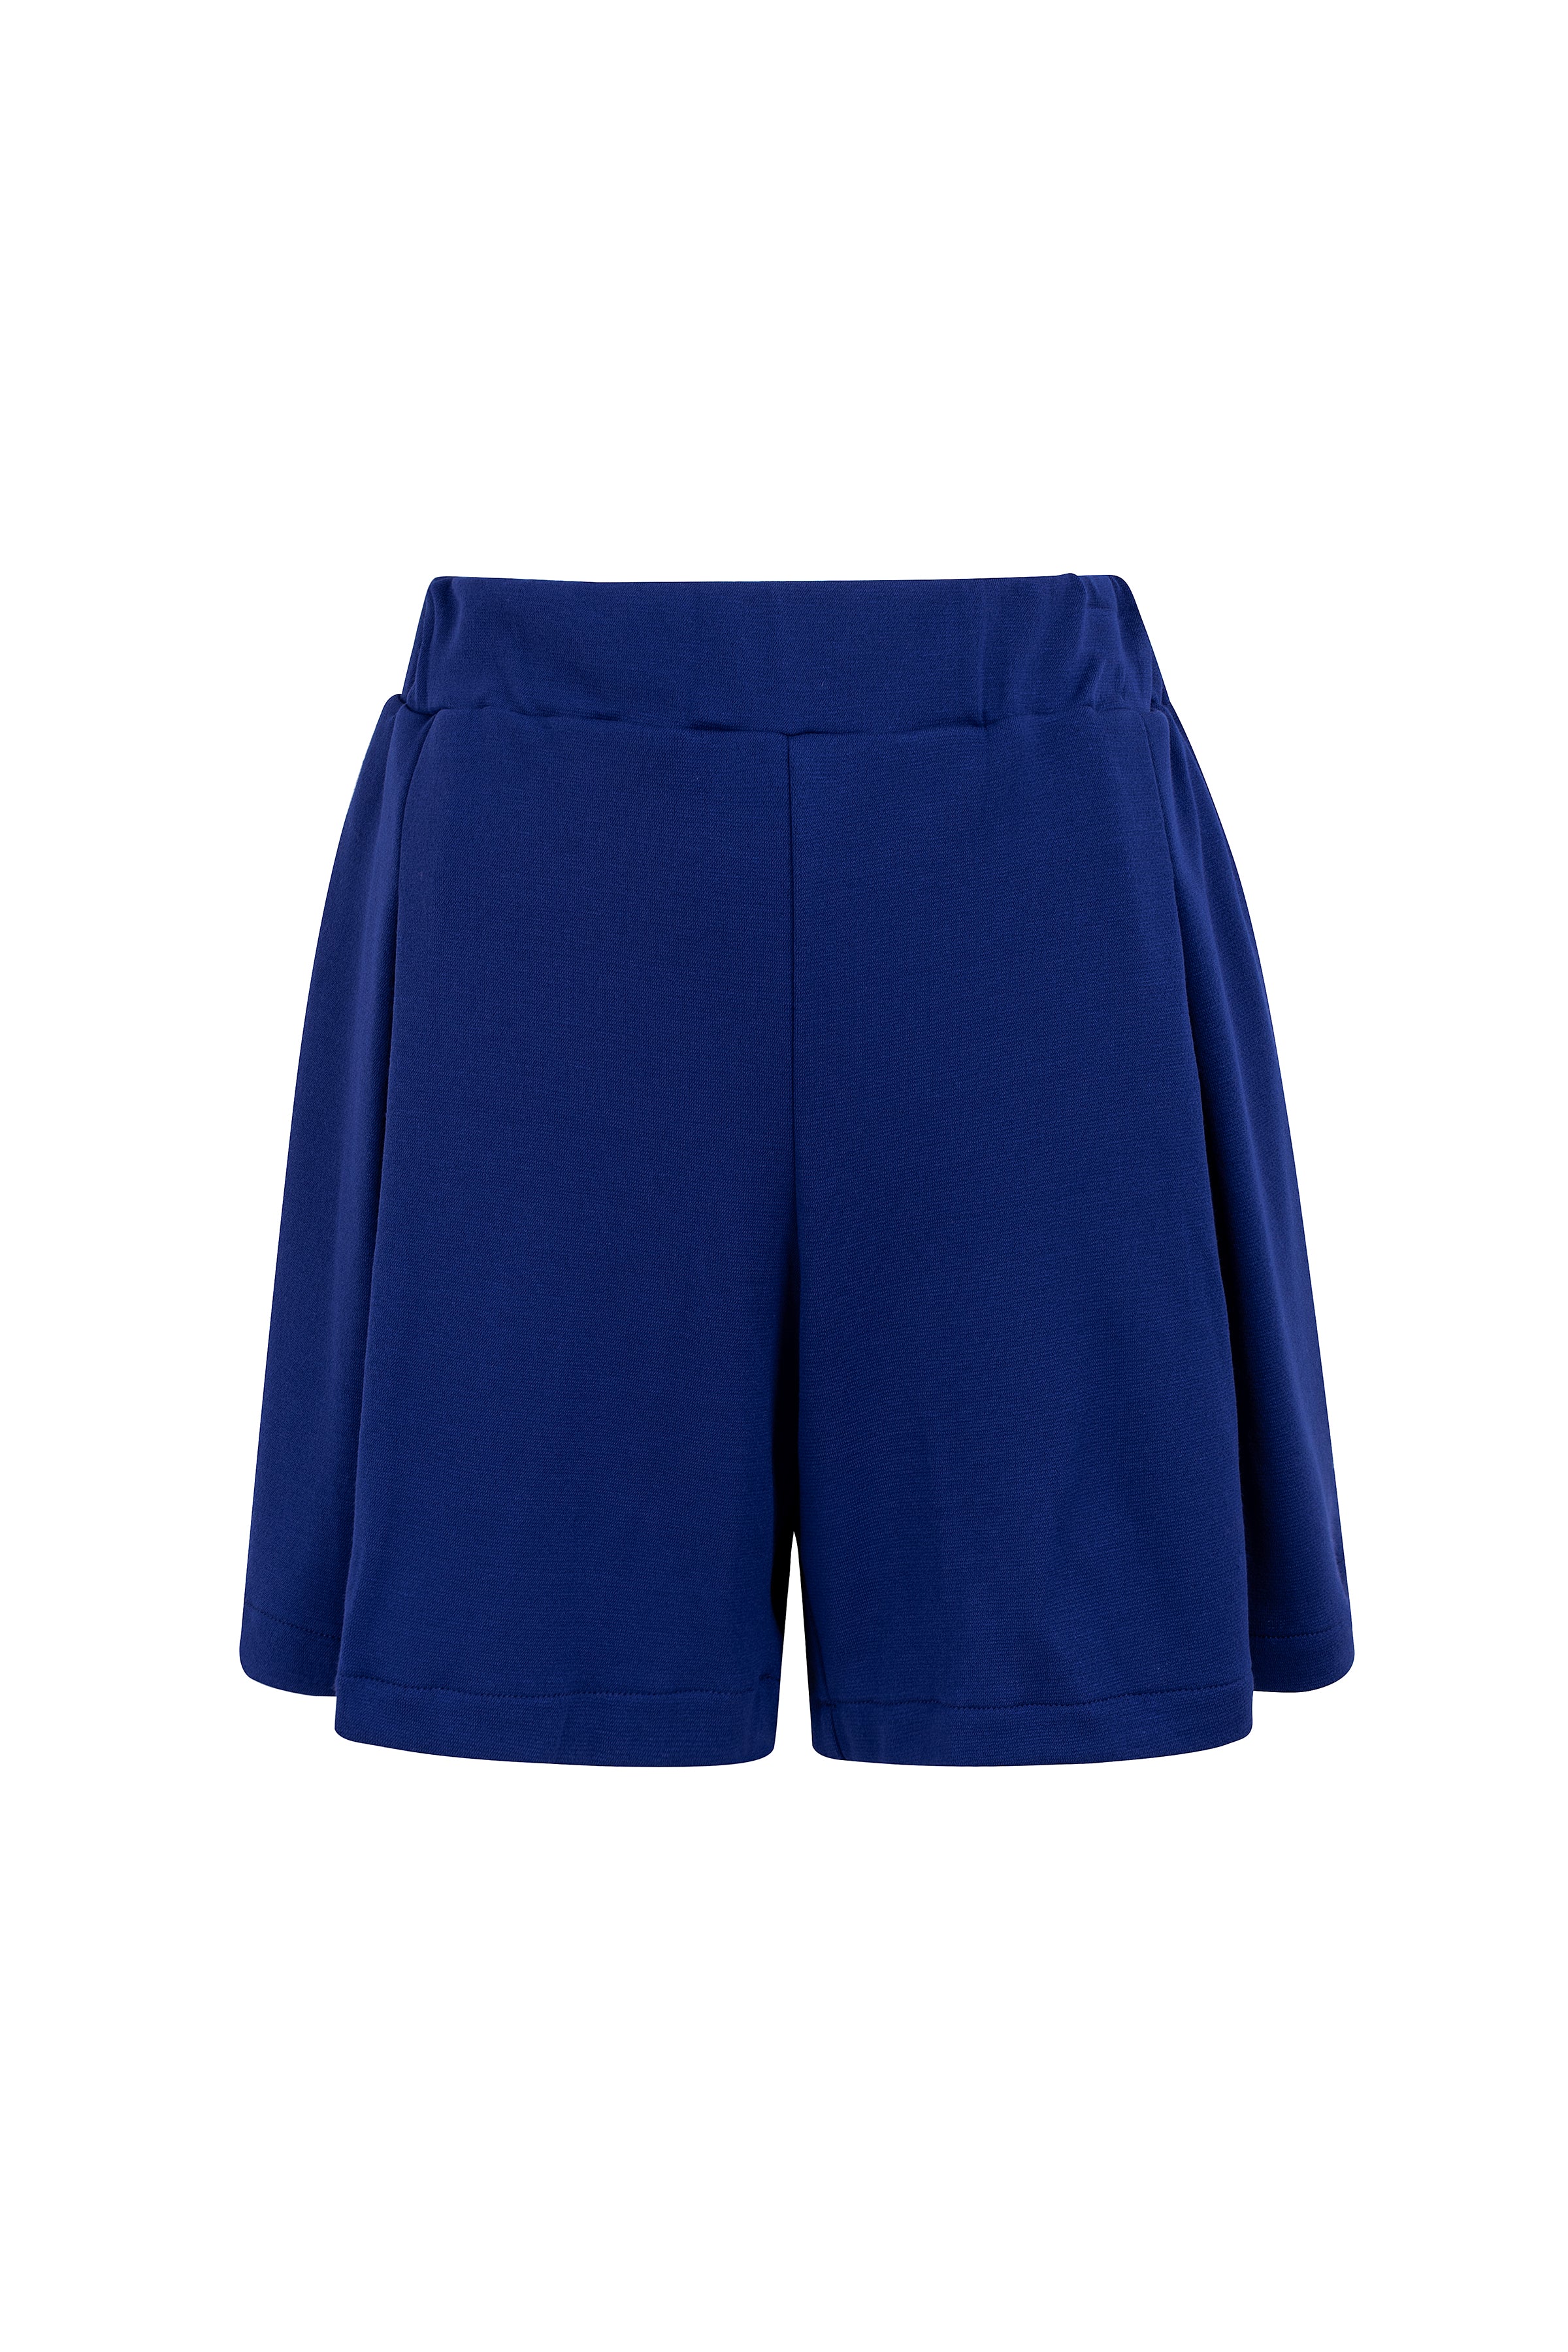 Essence Doble Shorts Electric Blue